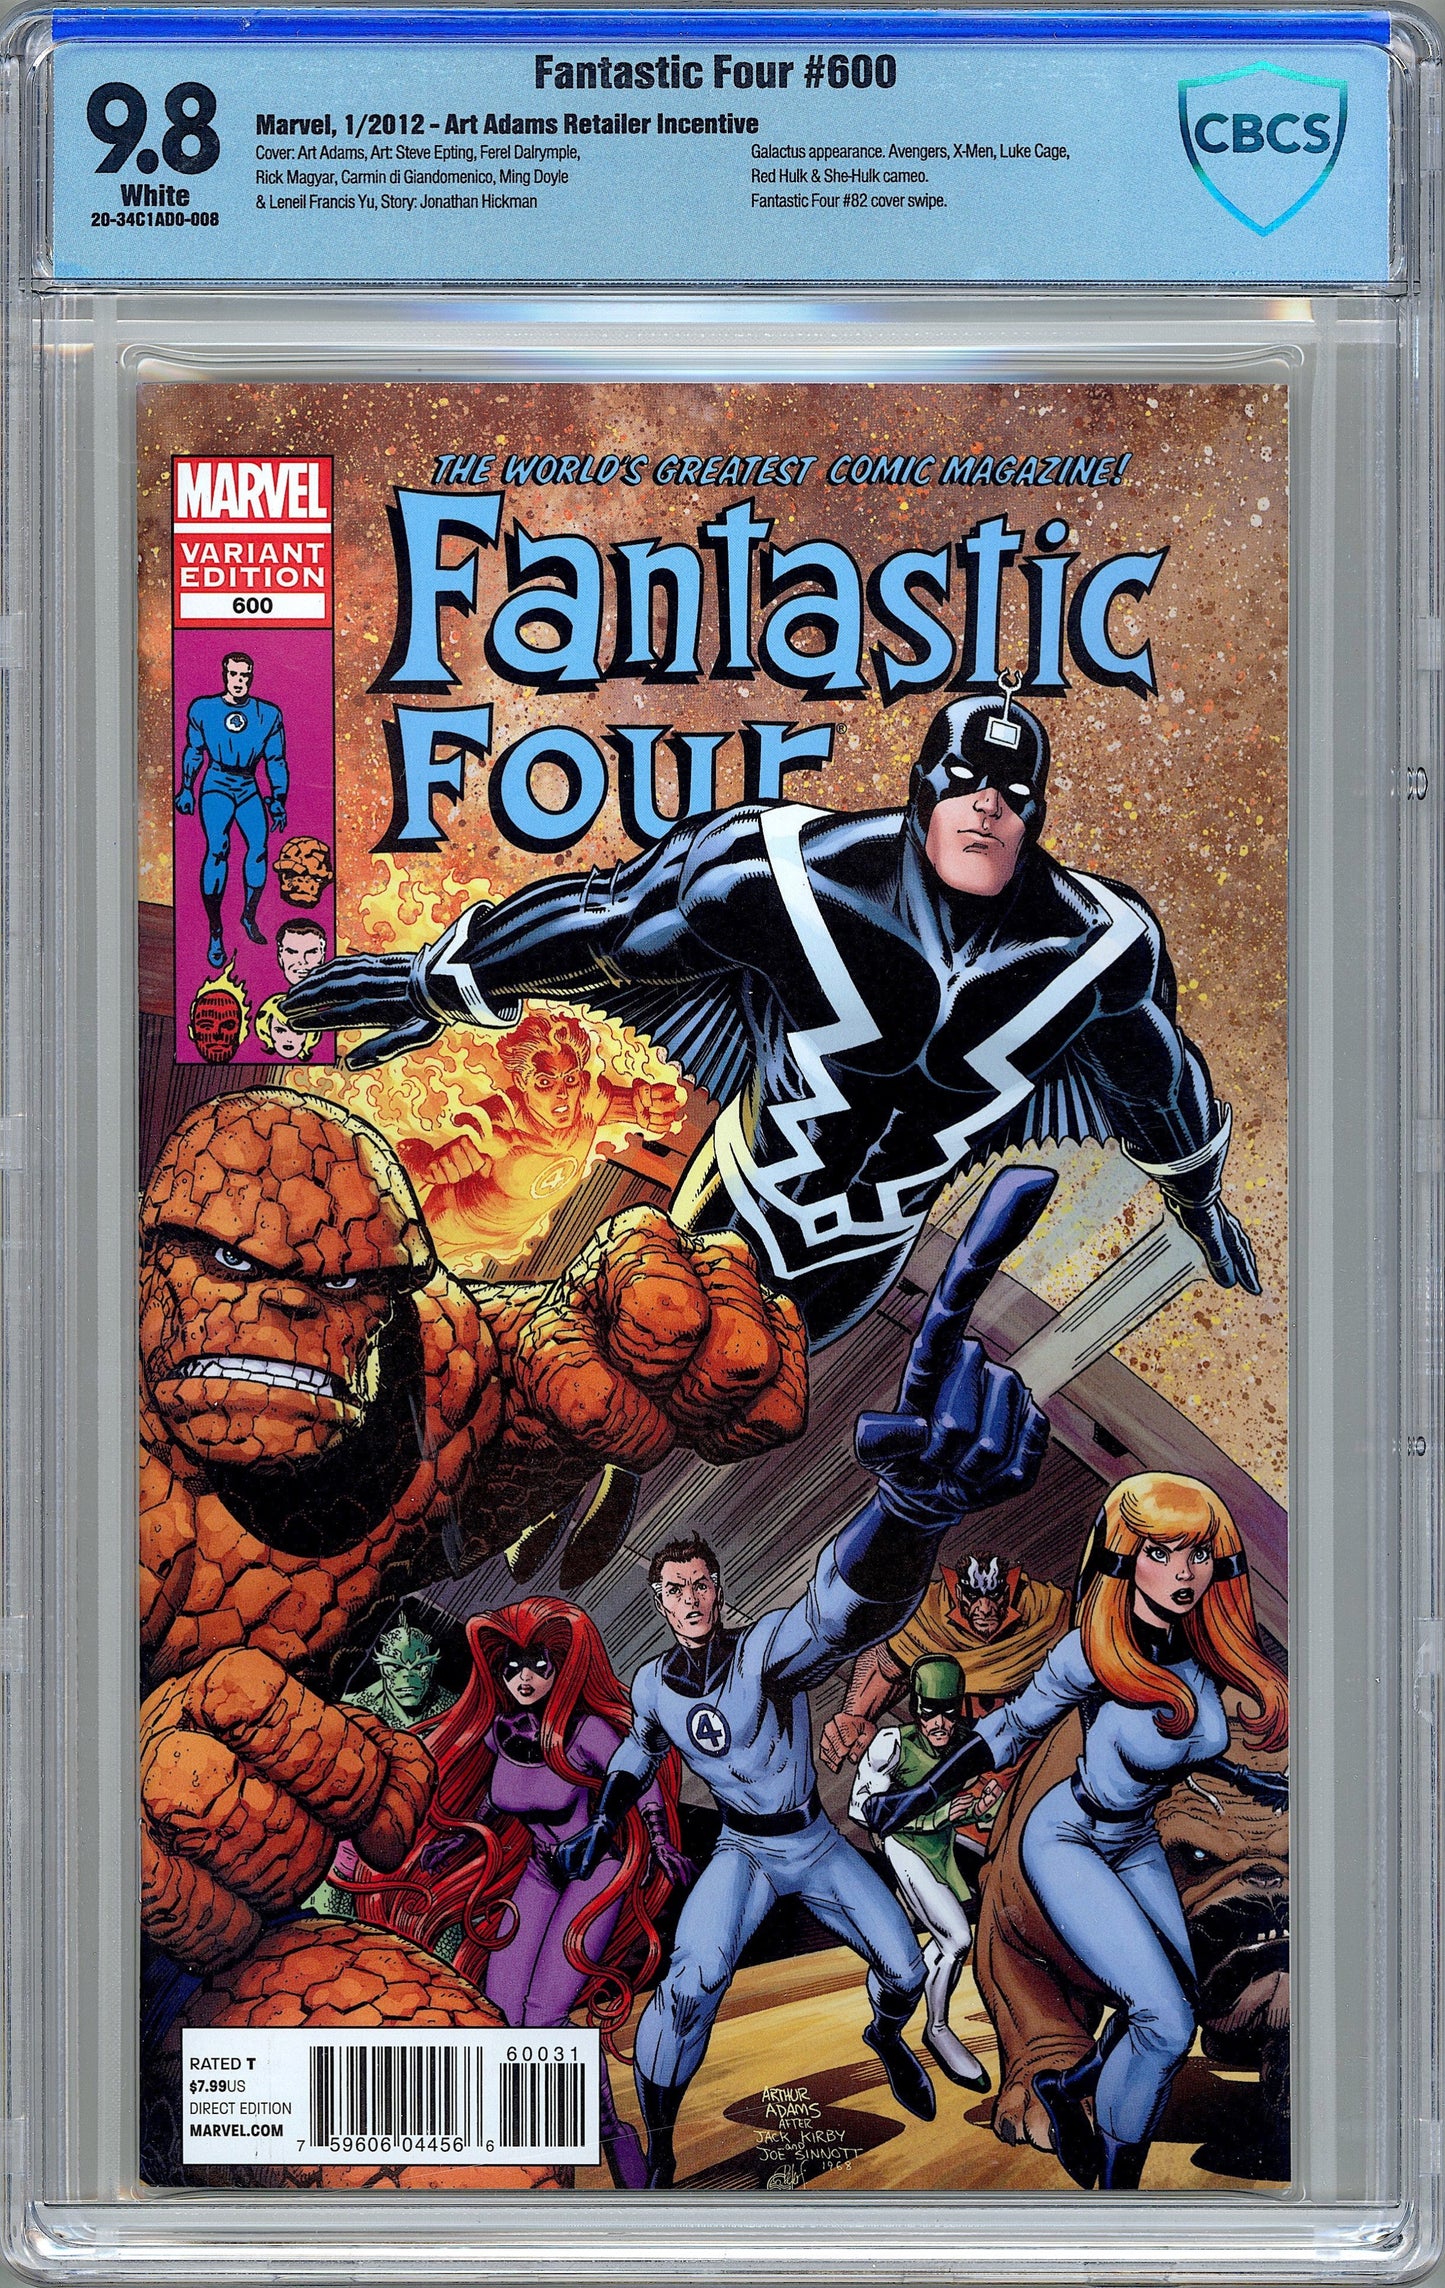 Fantastic Four #600 Art Adams Retailer Incentive  CBCS 9.8